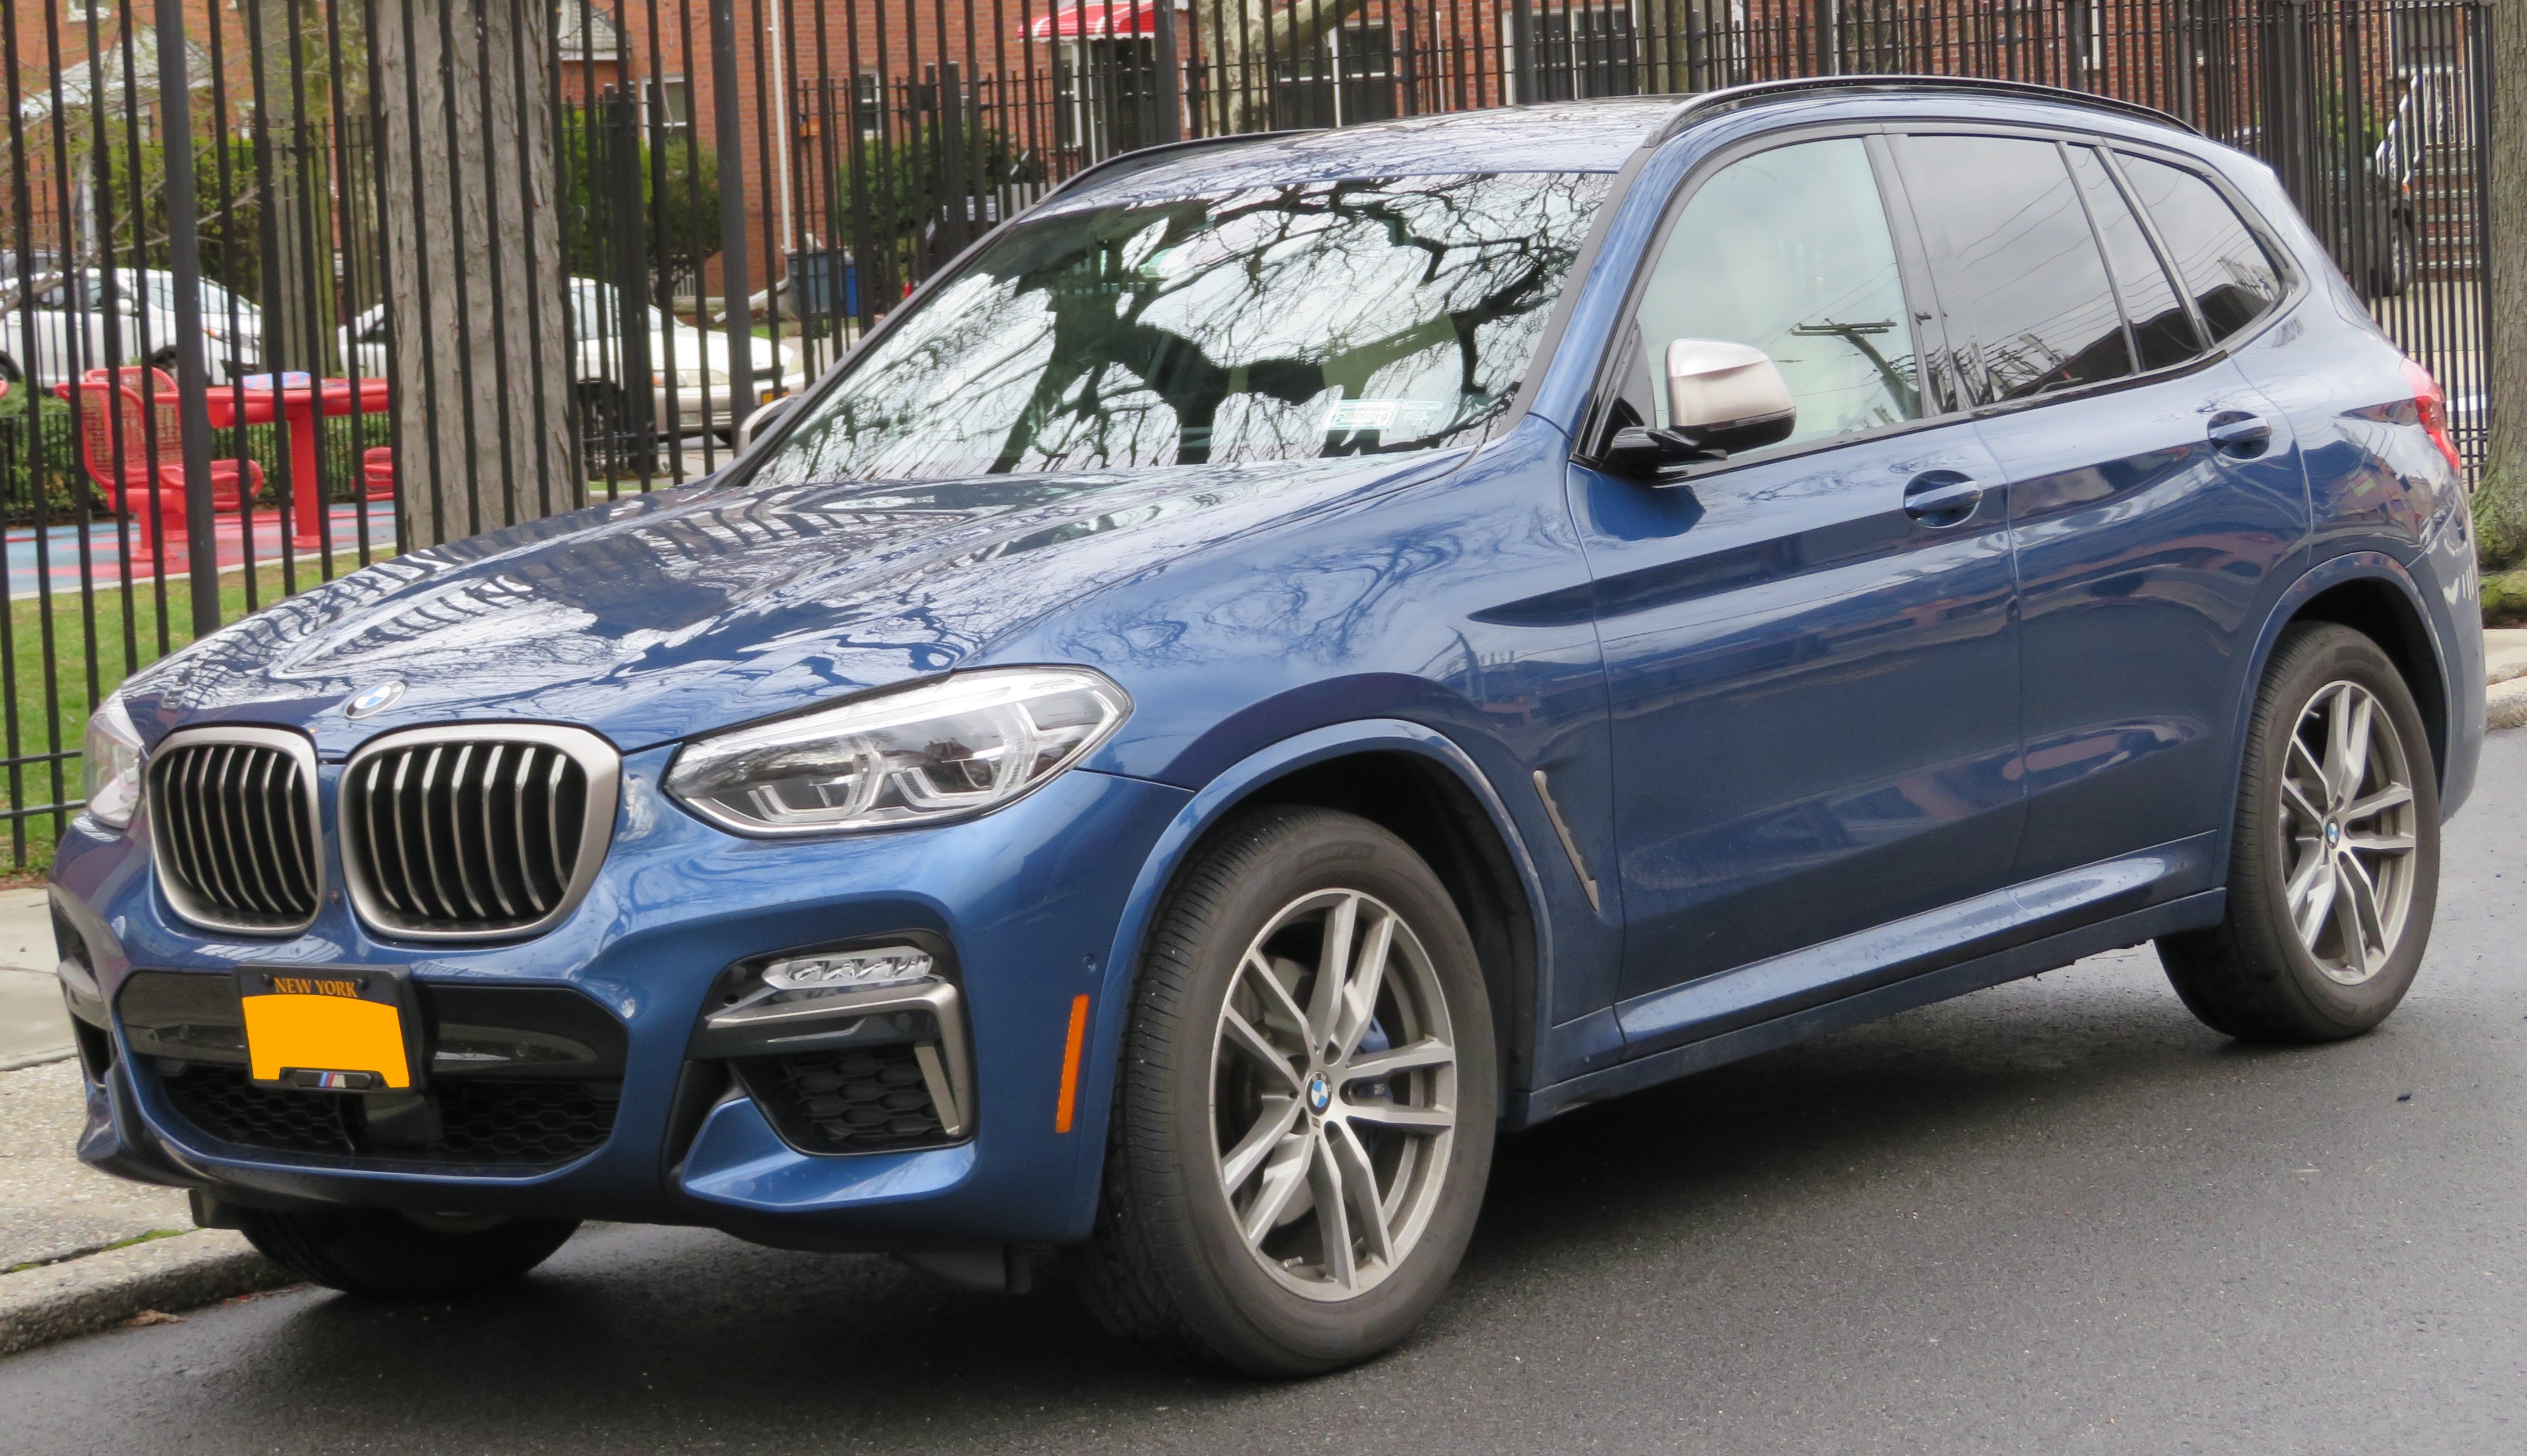 File:2018 BMW X3 (G01) M40i front 4.19.18.jpg - Wikipedia